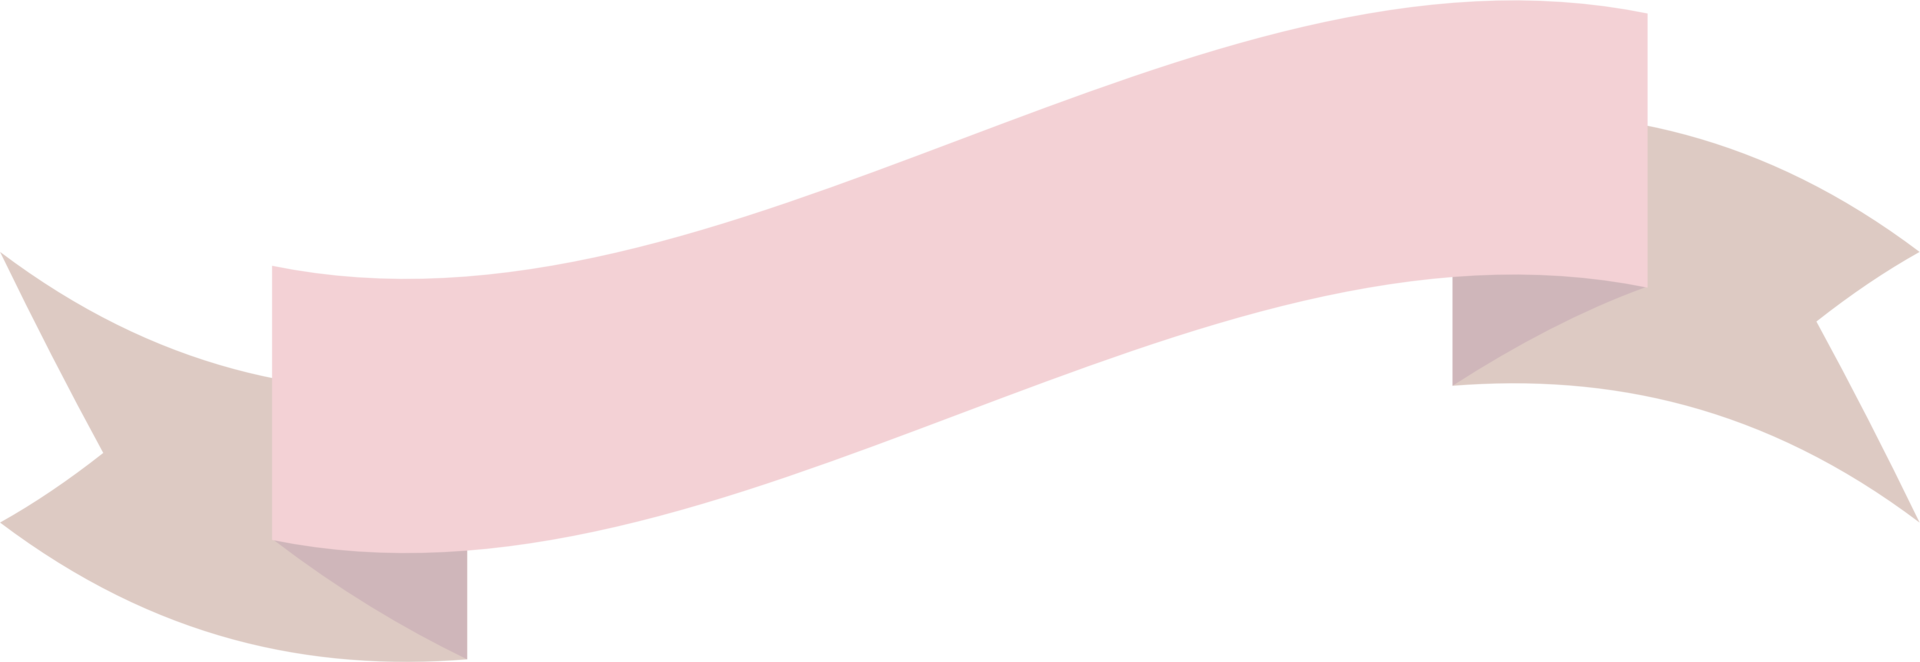 rosa pastell band och baner png